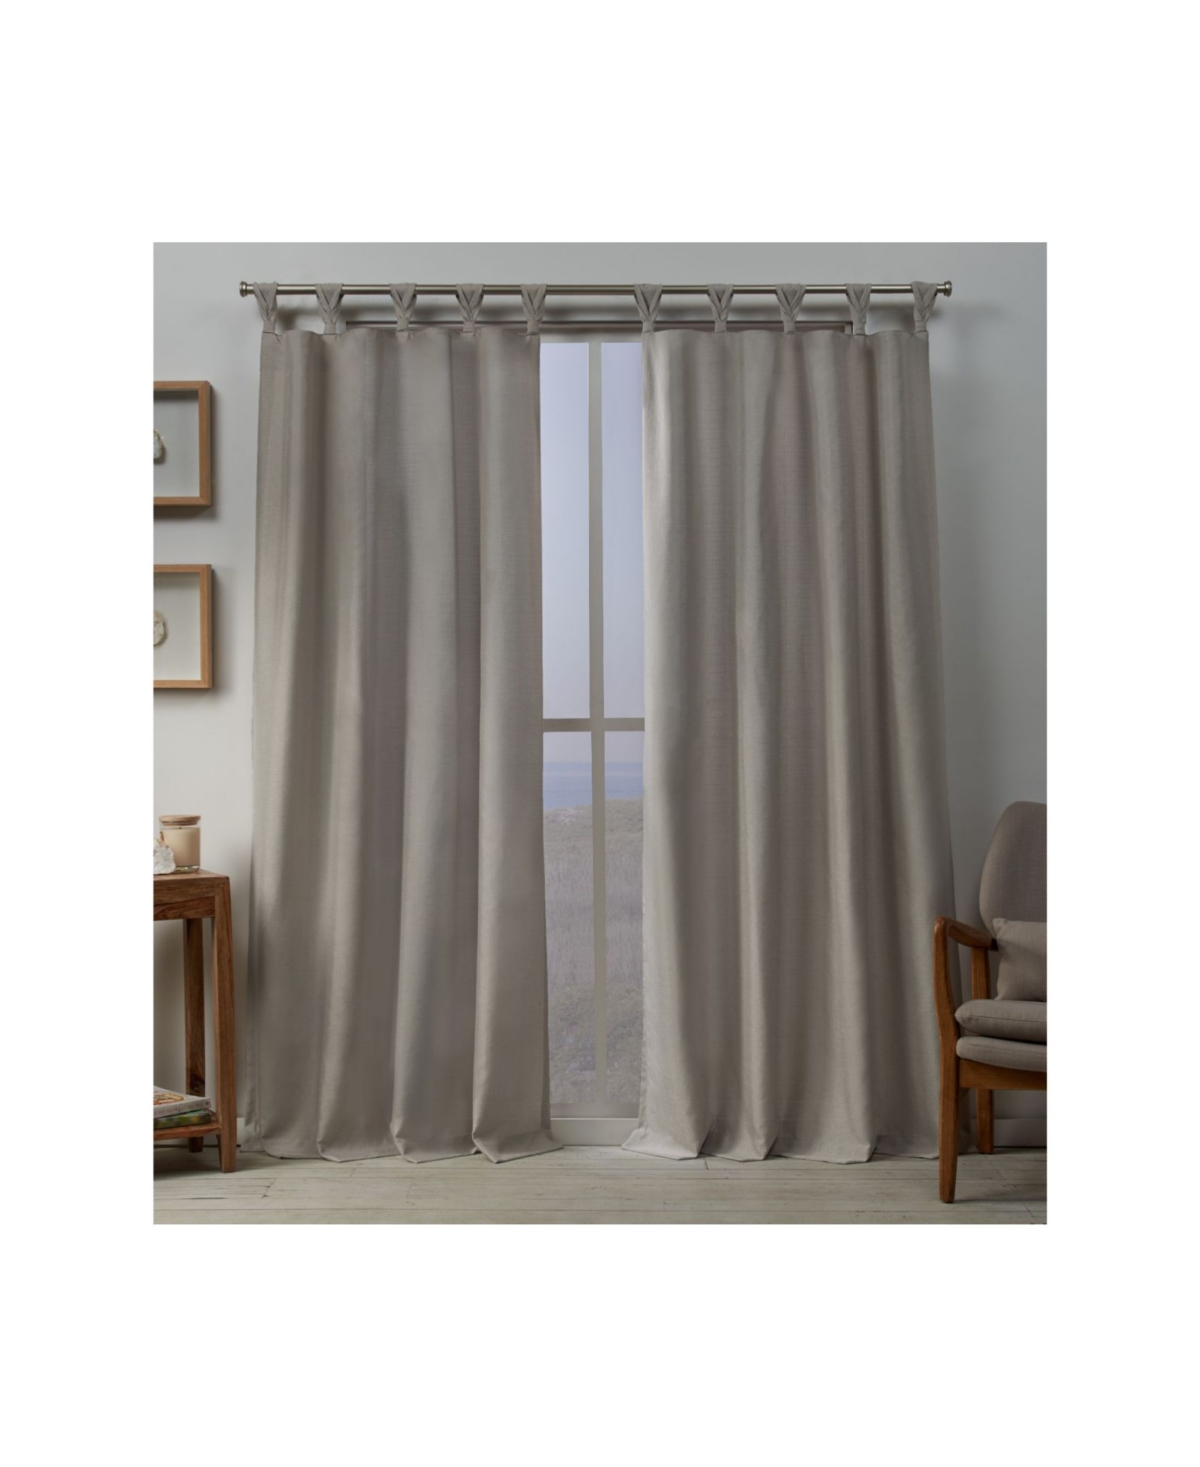 Loha Linen Braided Tab Top Curtain Panel Pair, 54" x 84" - Beigekhaki